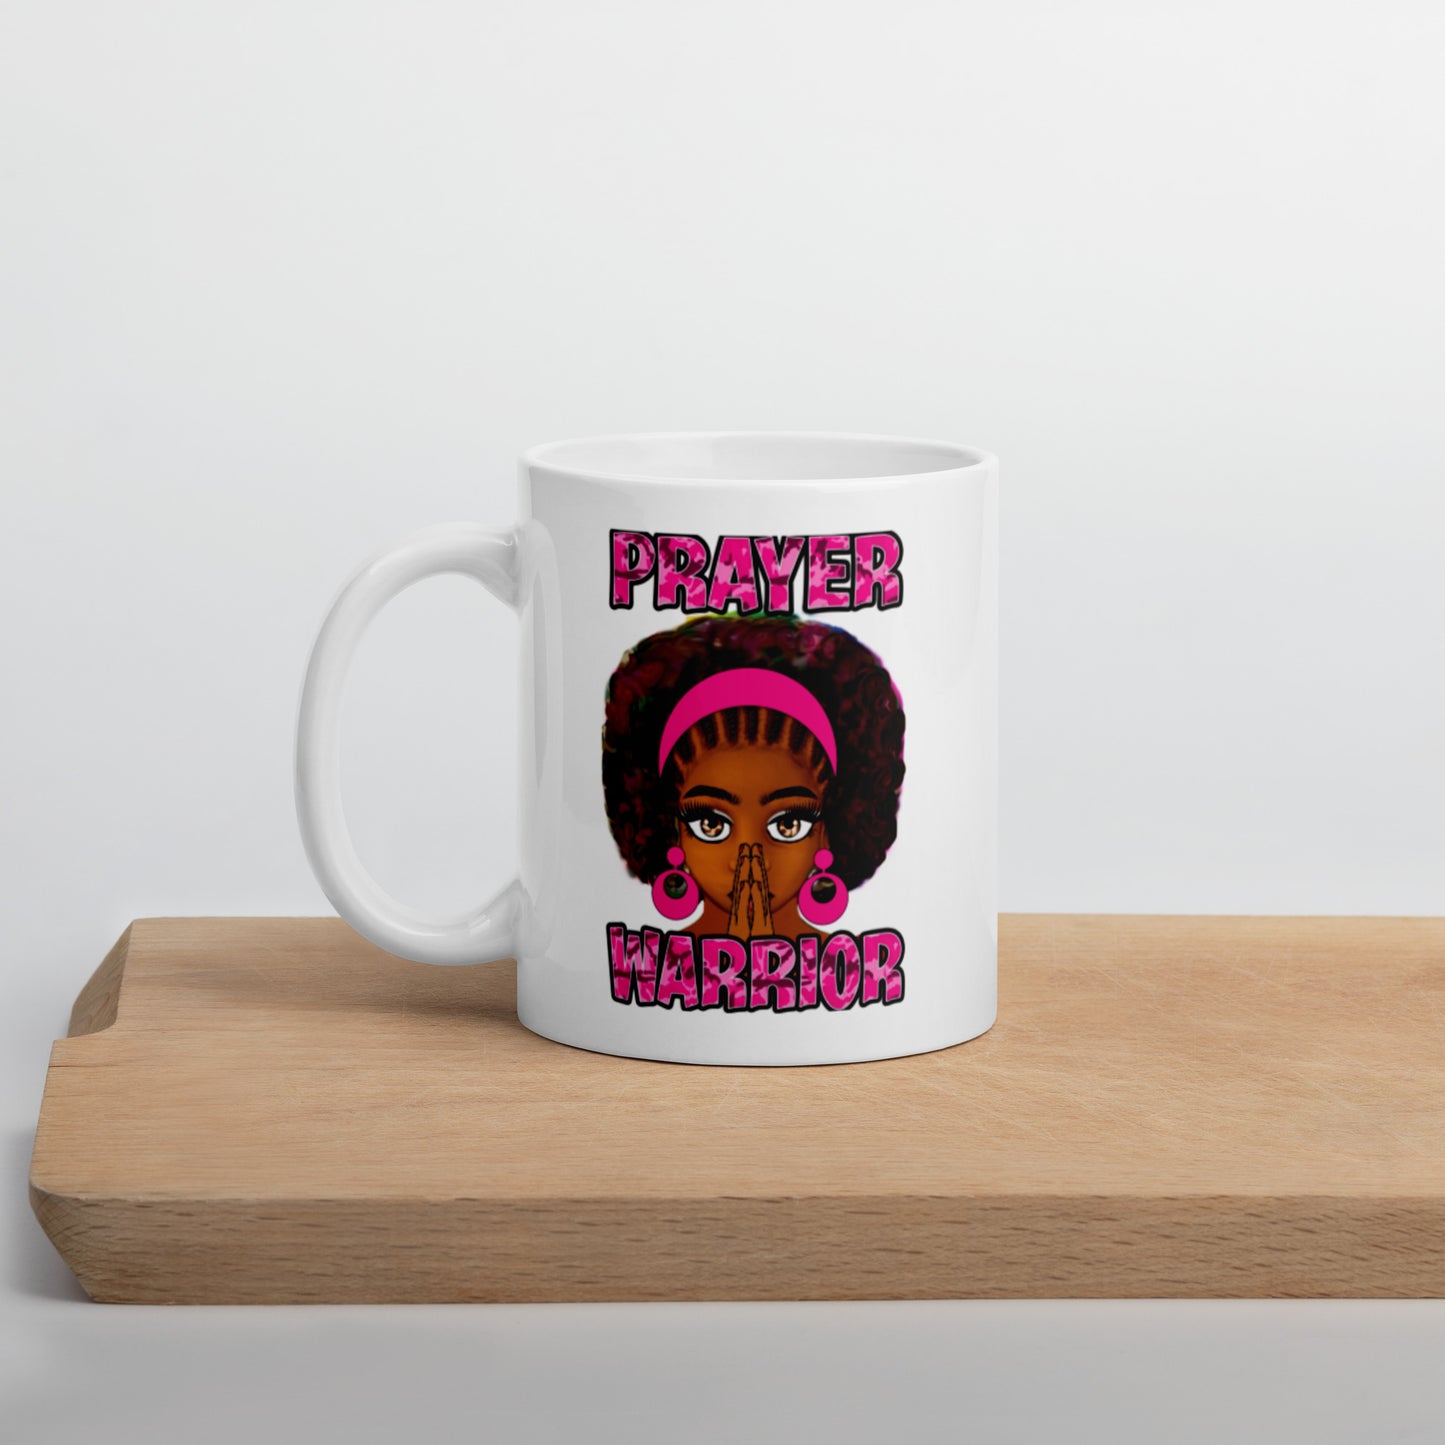 Pink Prayer Warrior Mug